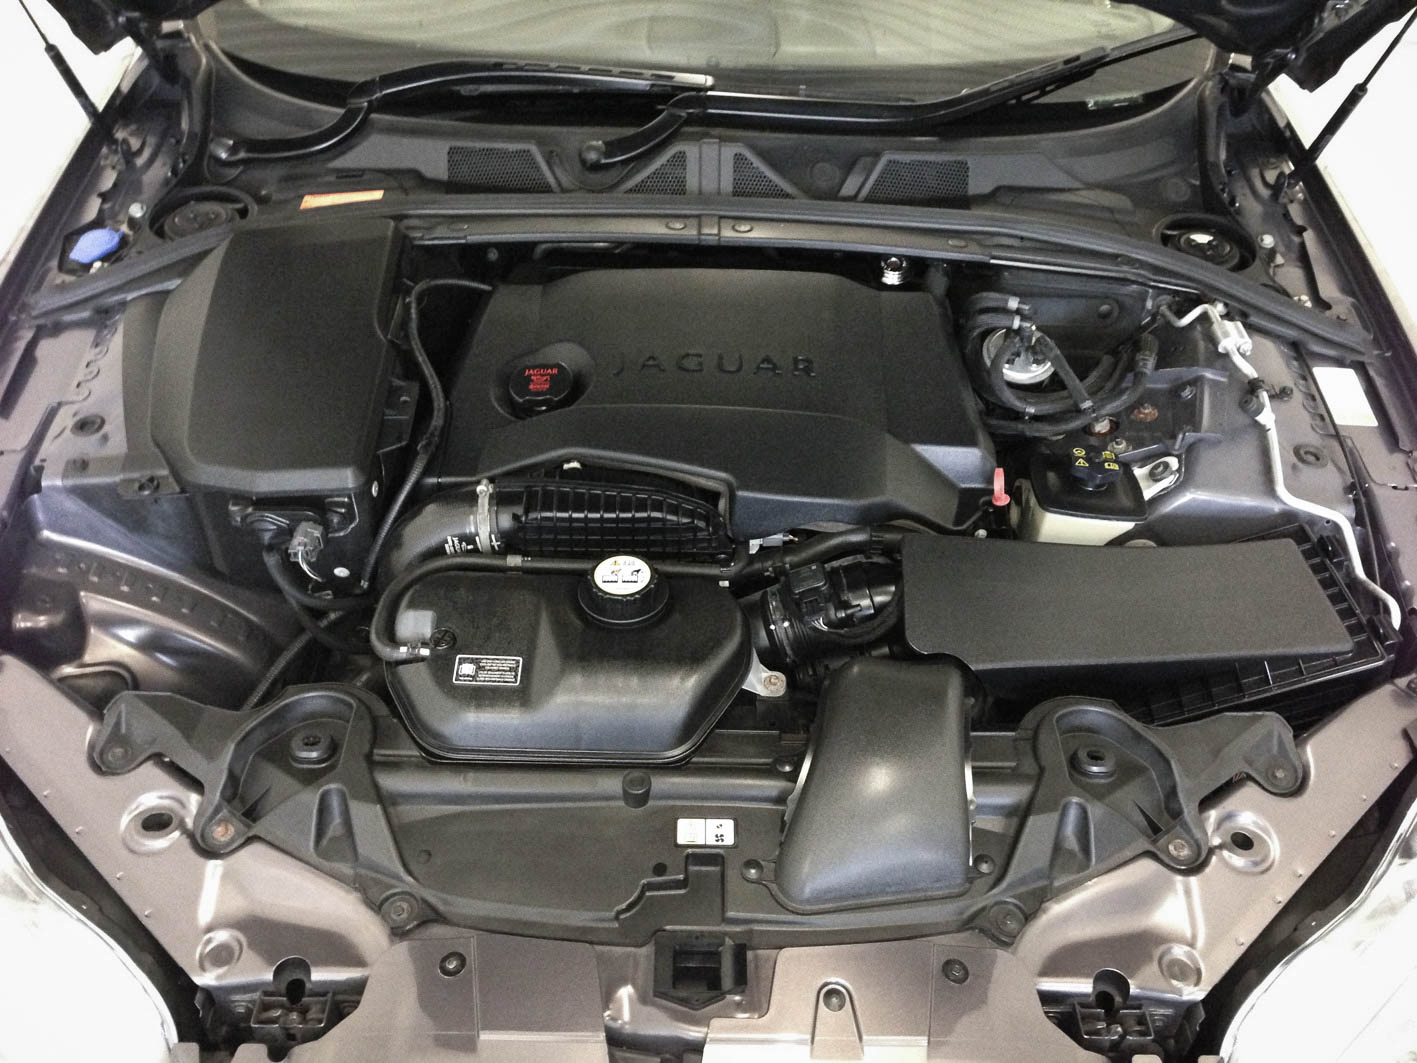 Jaguar XF – Engine